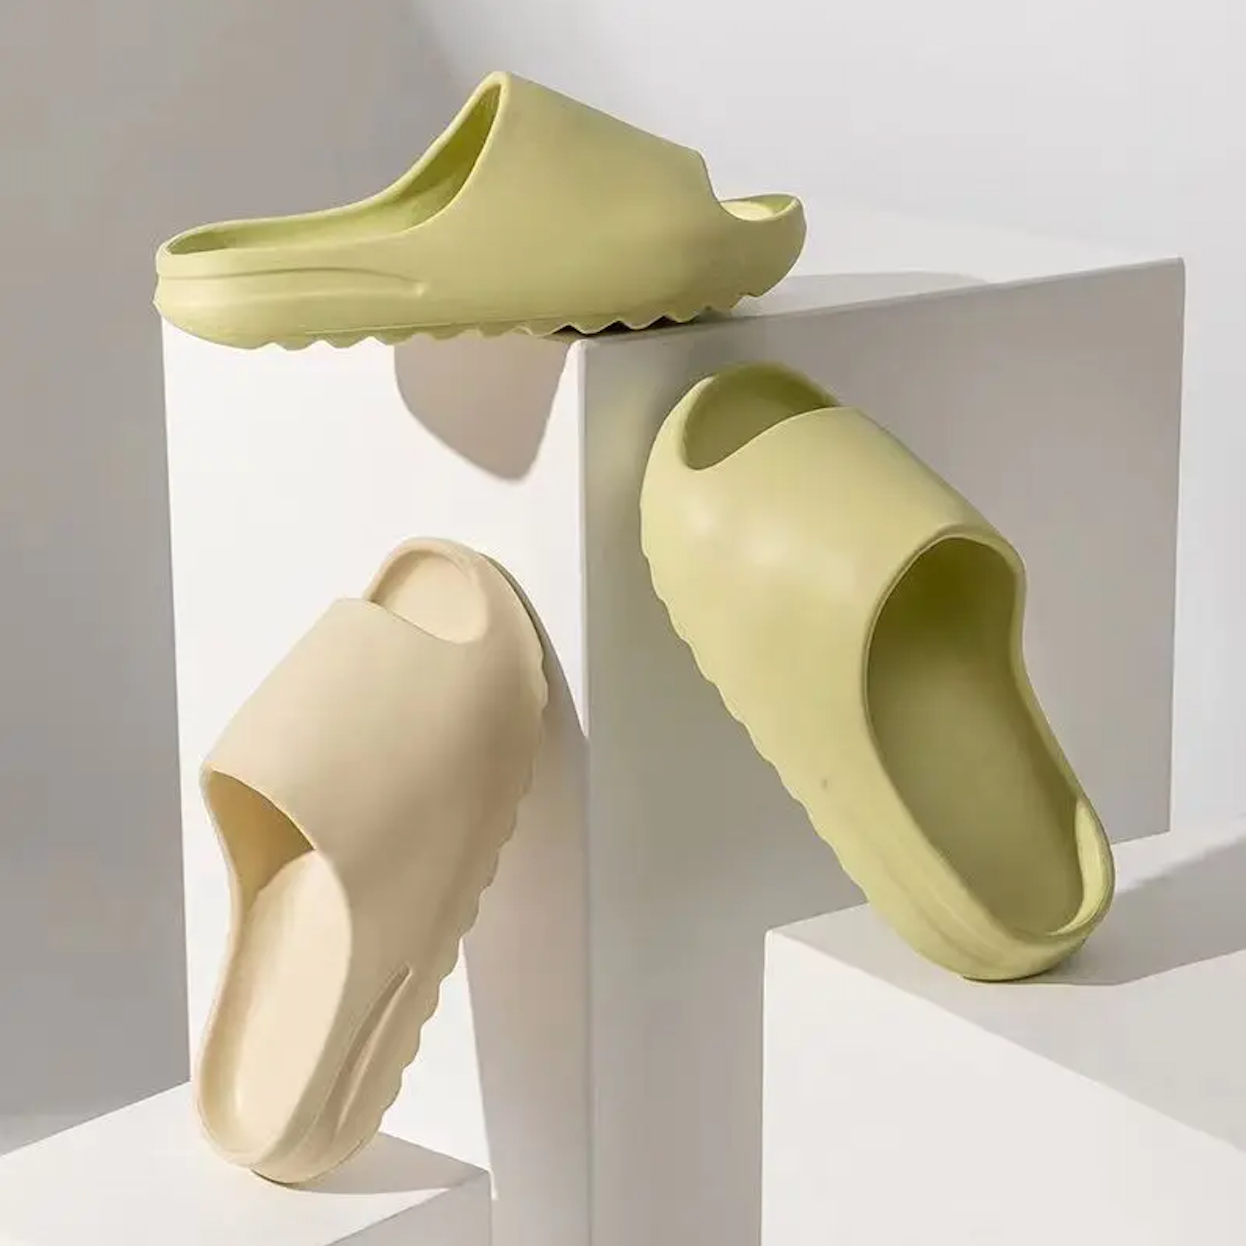 Pantofola Slide unisex- Il Massimo Comfort con Stile